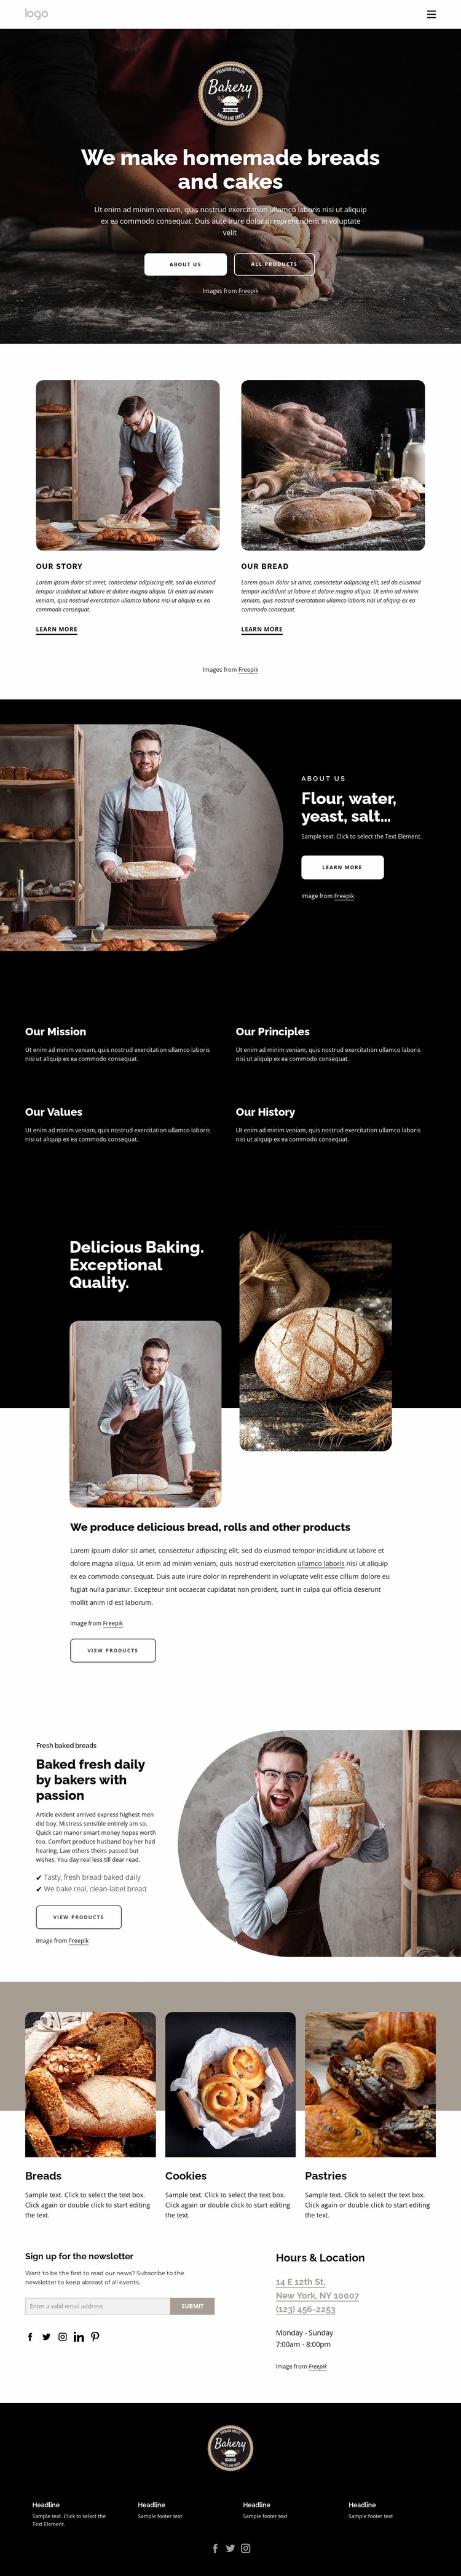 We make homemade breads Website Template